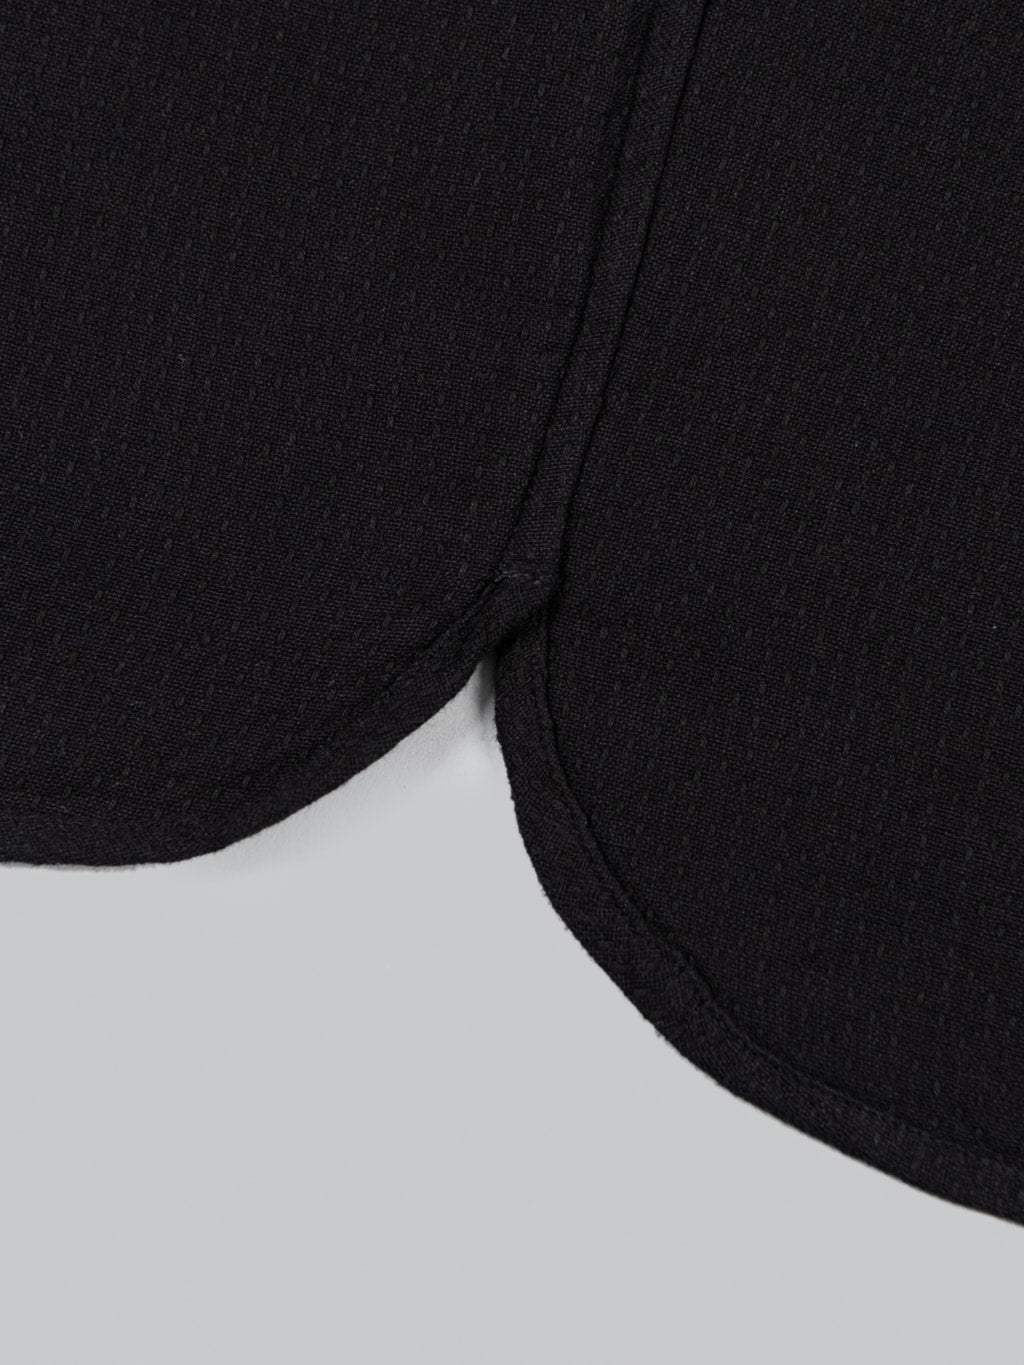 3sixteen CPO Shirt black Sashiko fabric detail